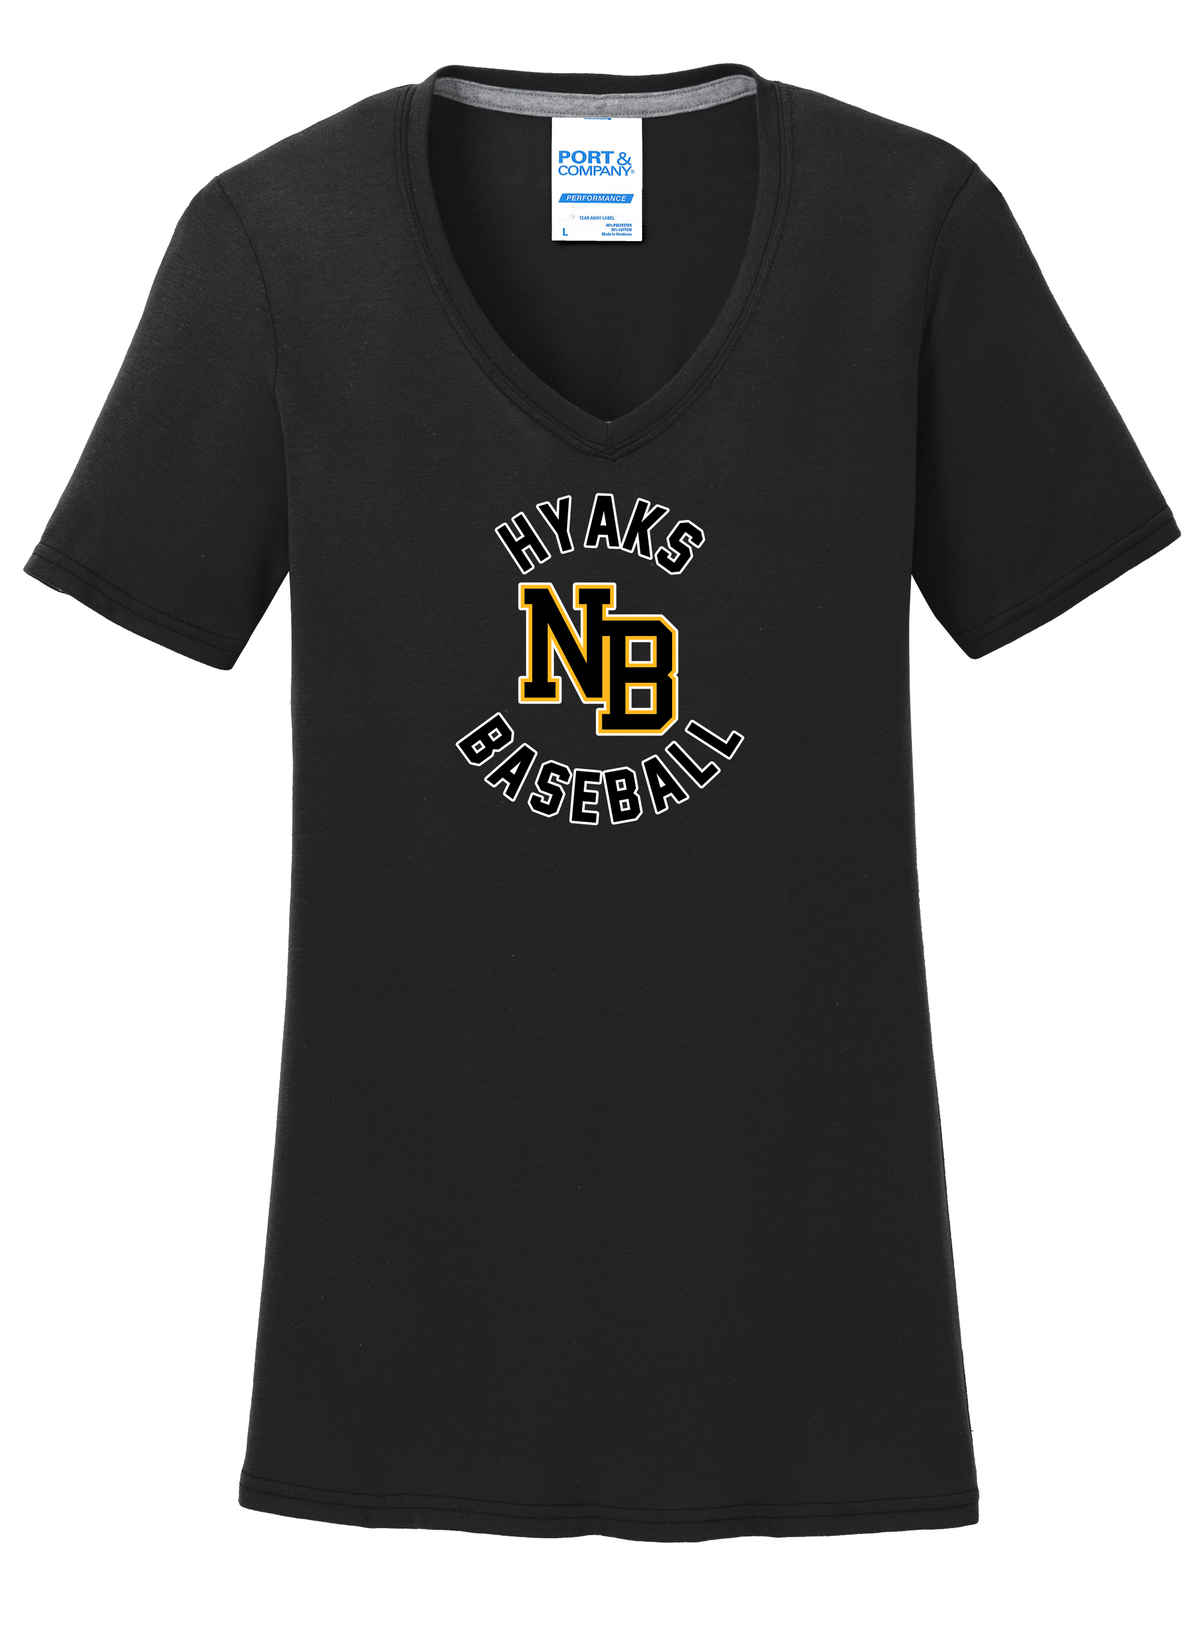 North Beach Baseball Women's T-Shirt